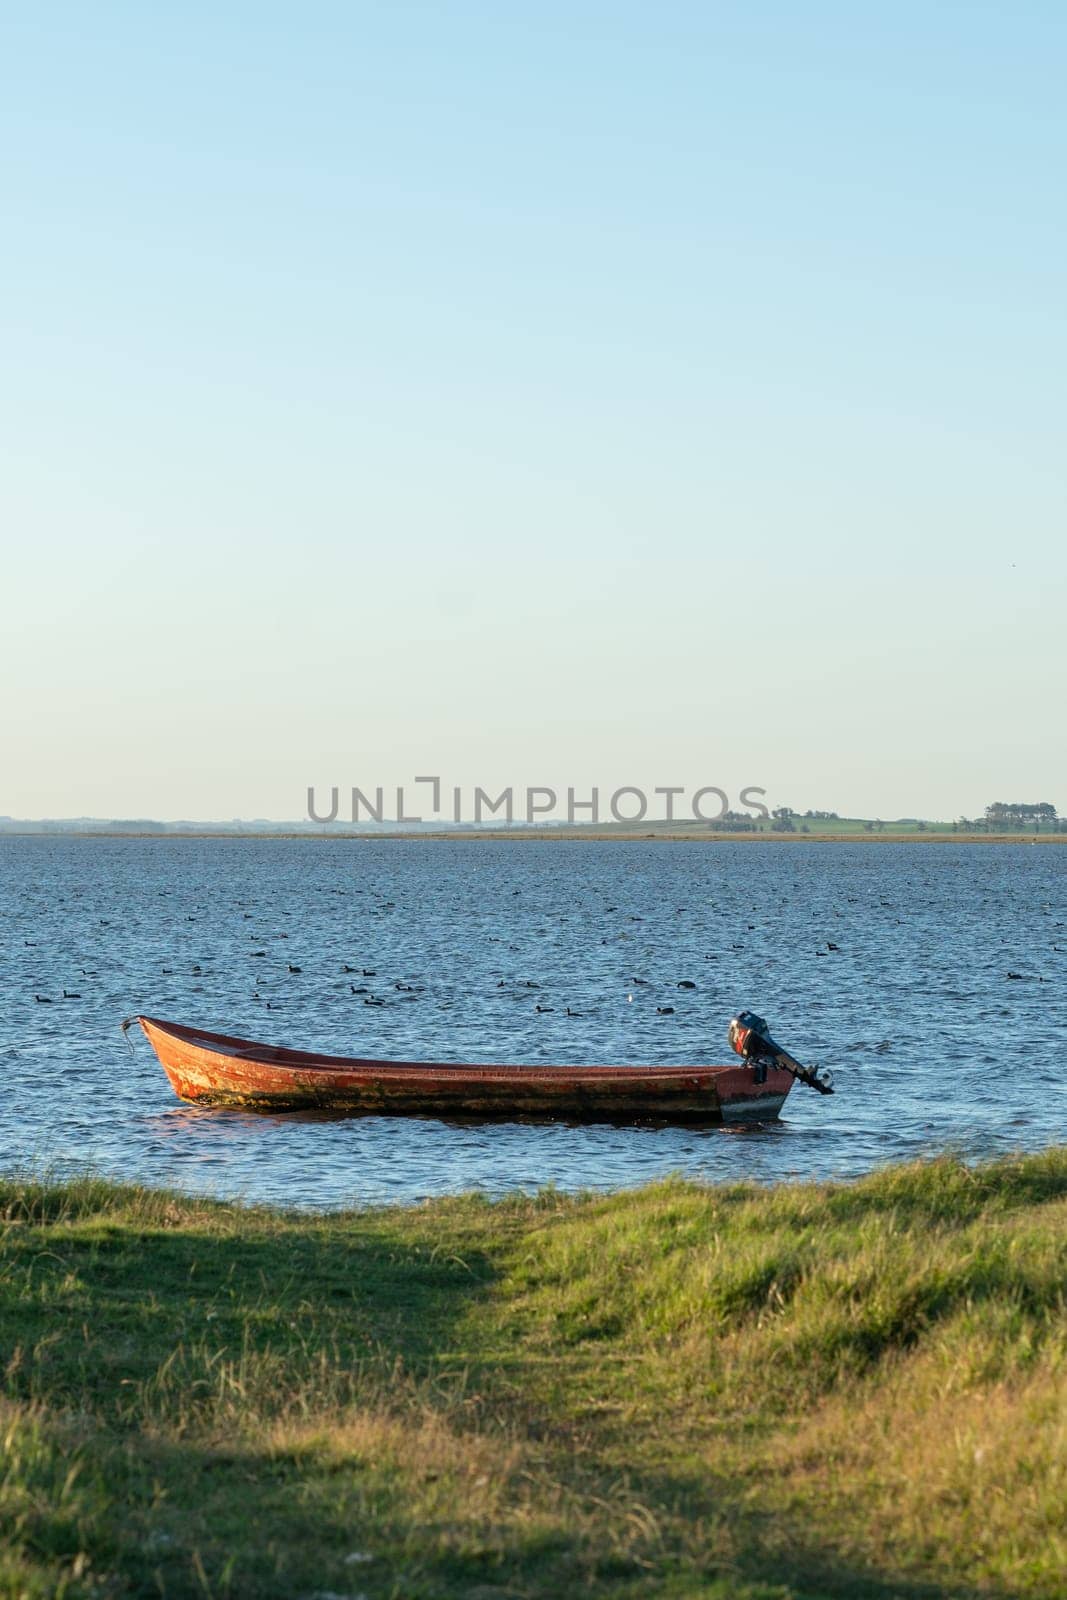 Fishing boat in the Laguna de Rocha in La Paloma in the protected area in Uruguay. by martinscphoto